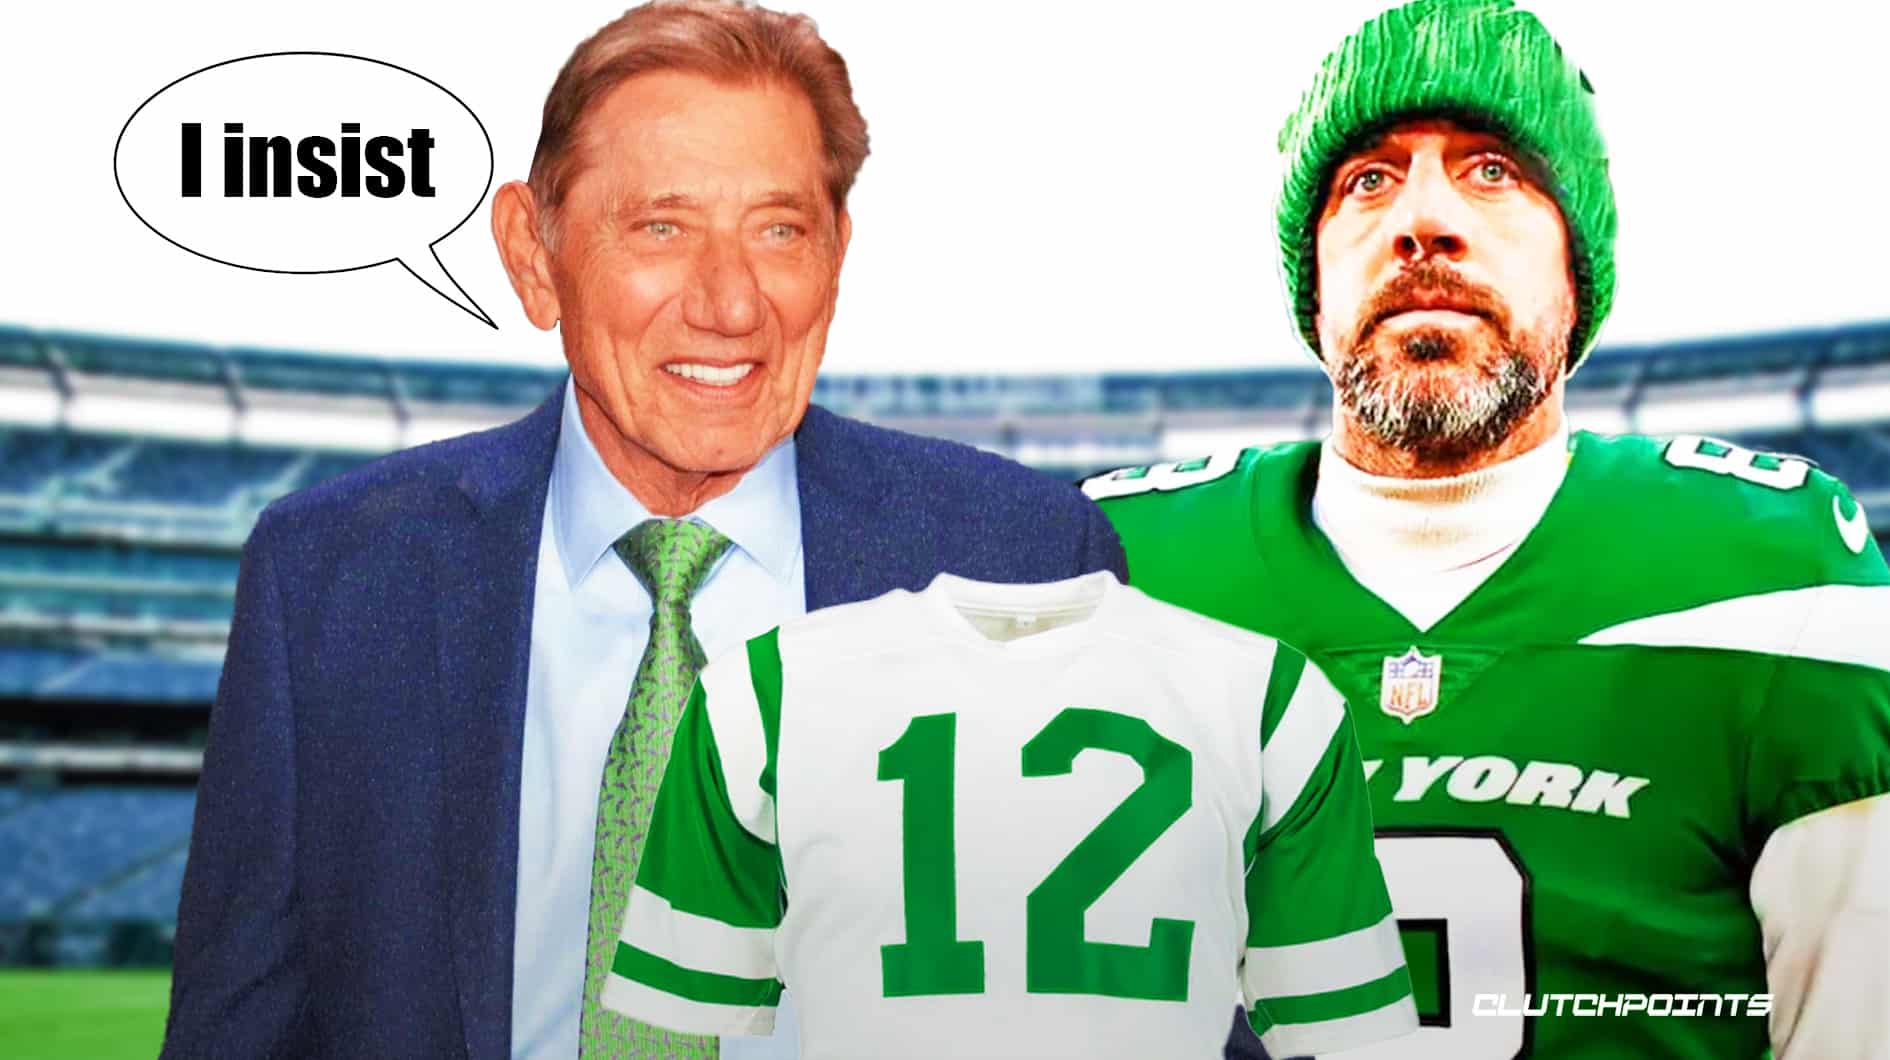 Aaron Rodgers' Jets jersey will be No. 8, not Joe Namath's 12